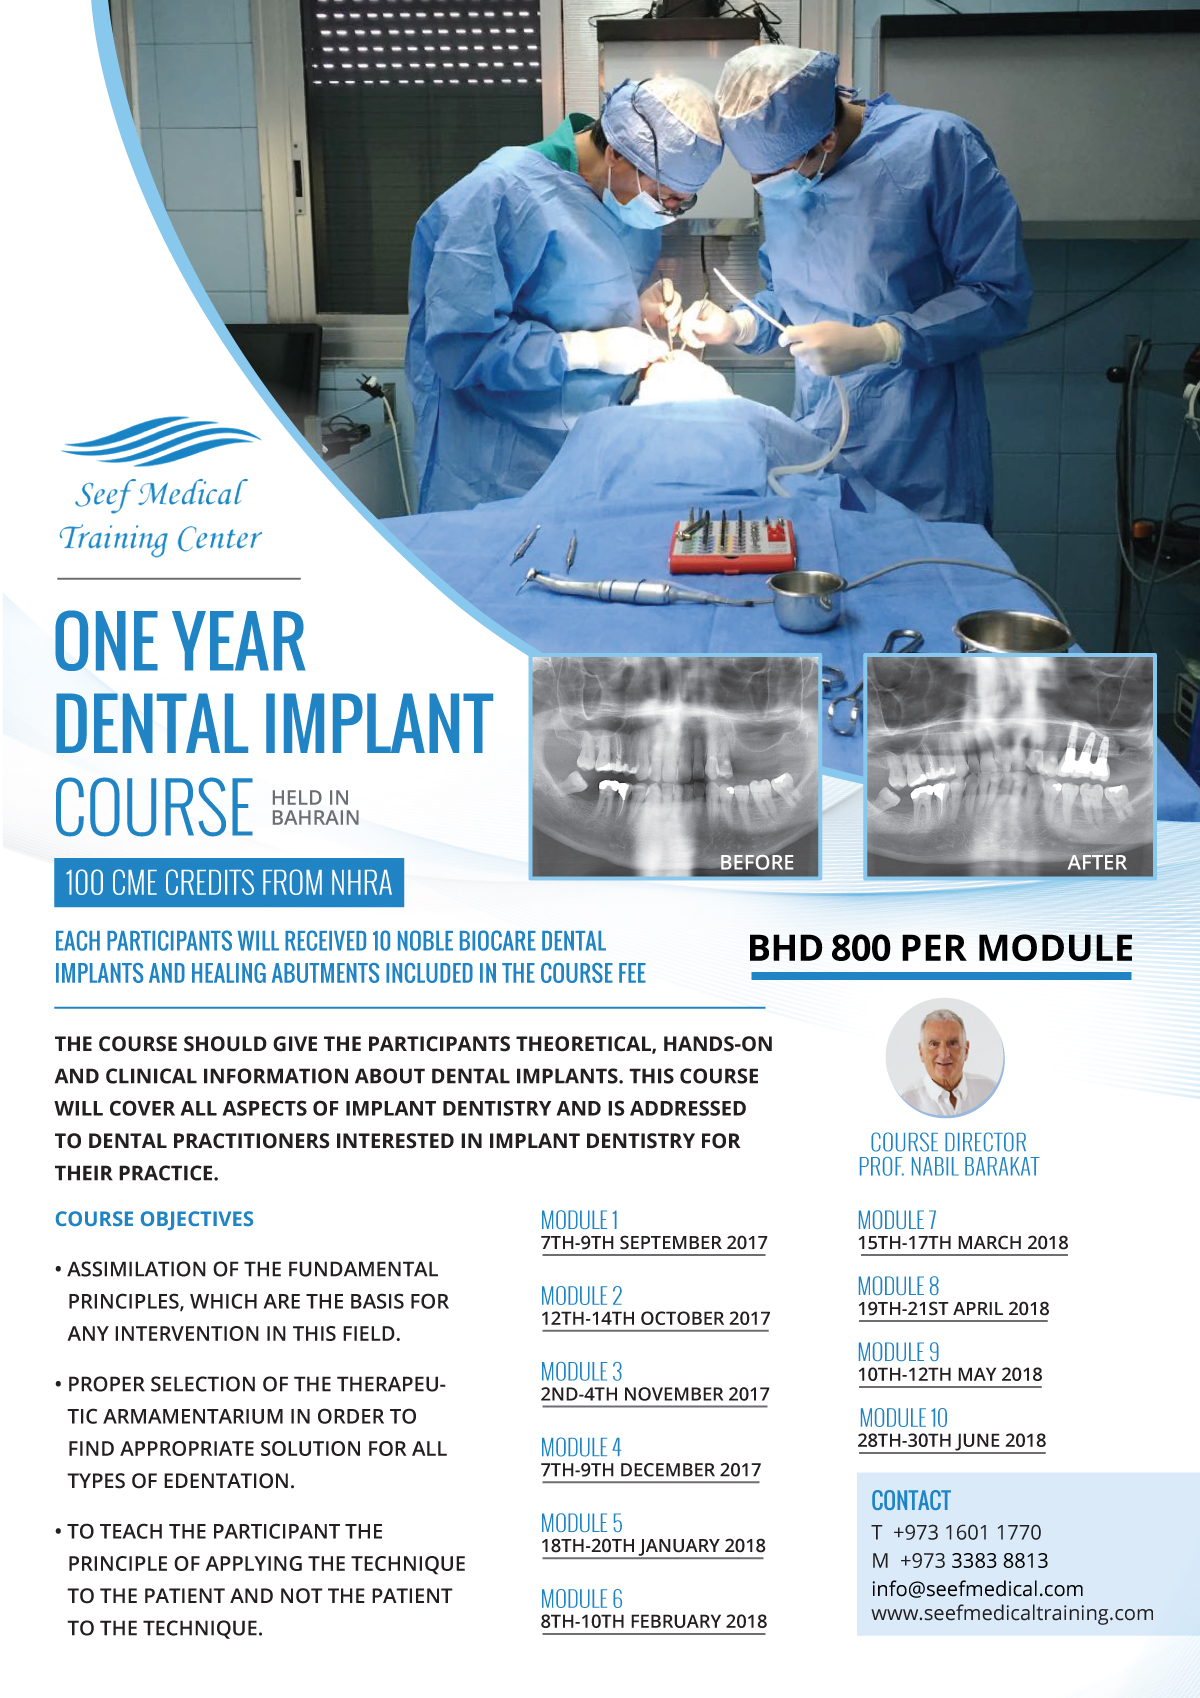 A One Year Program in Dental Implants